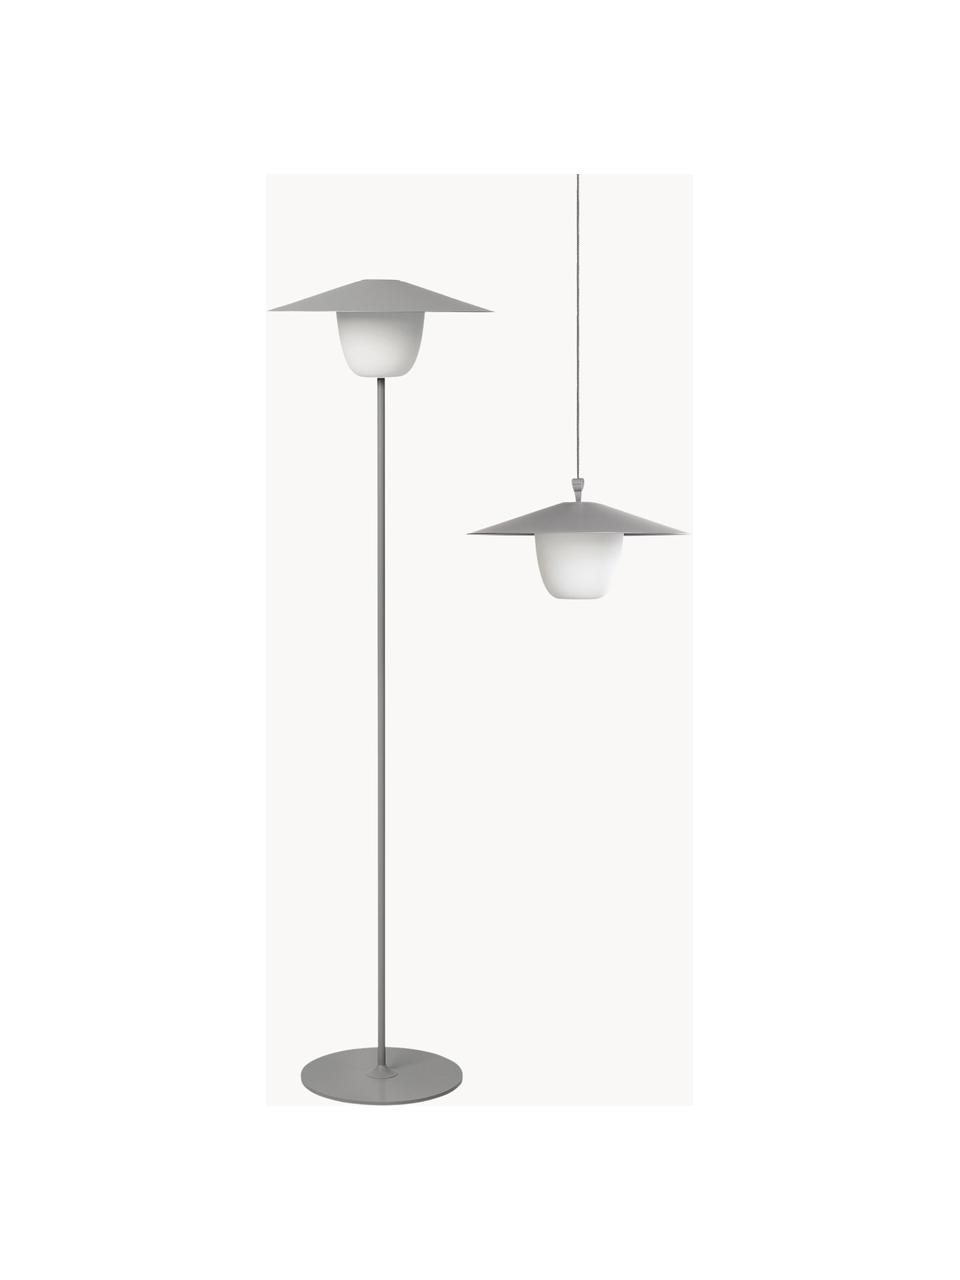 Mobiele dimbare LED outdoor lamp Ani om op te hangen of te zetten, Lampenkap: aluminium, Lampvoet: gecoat aluminium, Grijs, wit, Ø 34 x H 121 cm